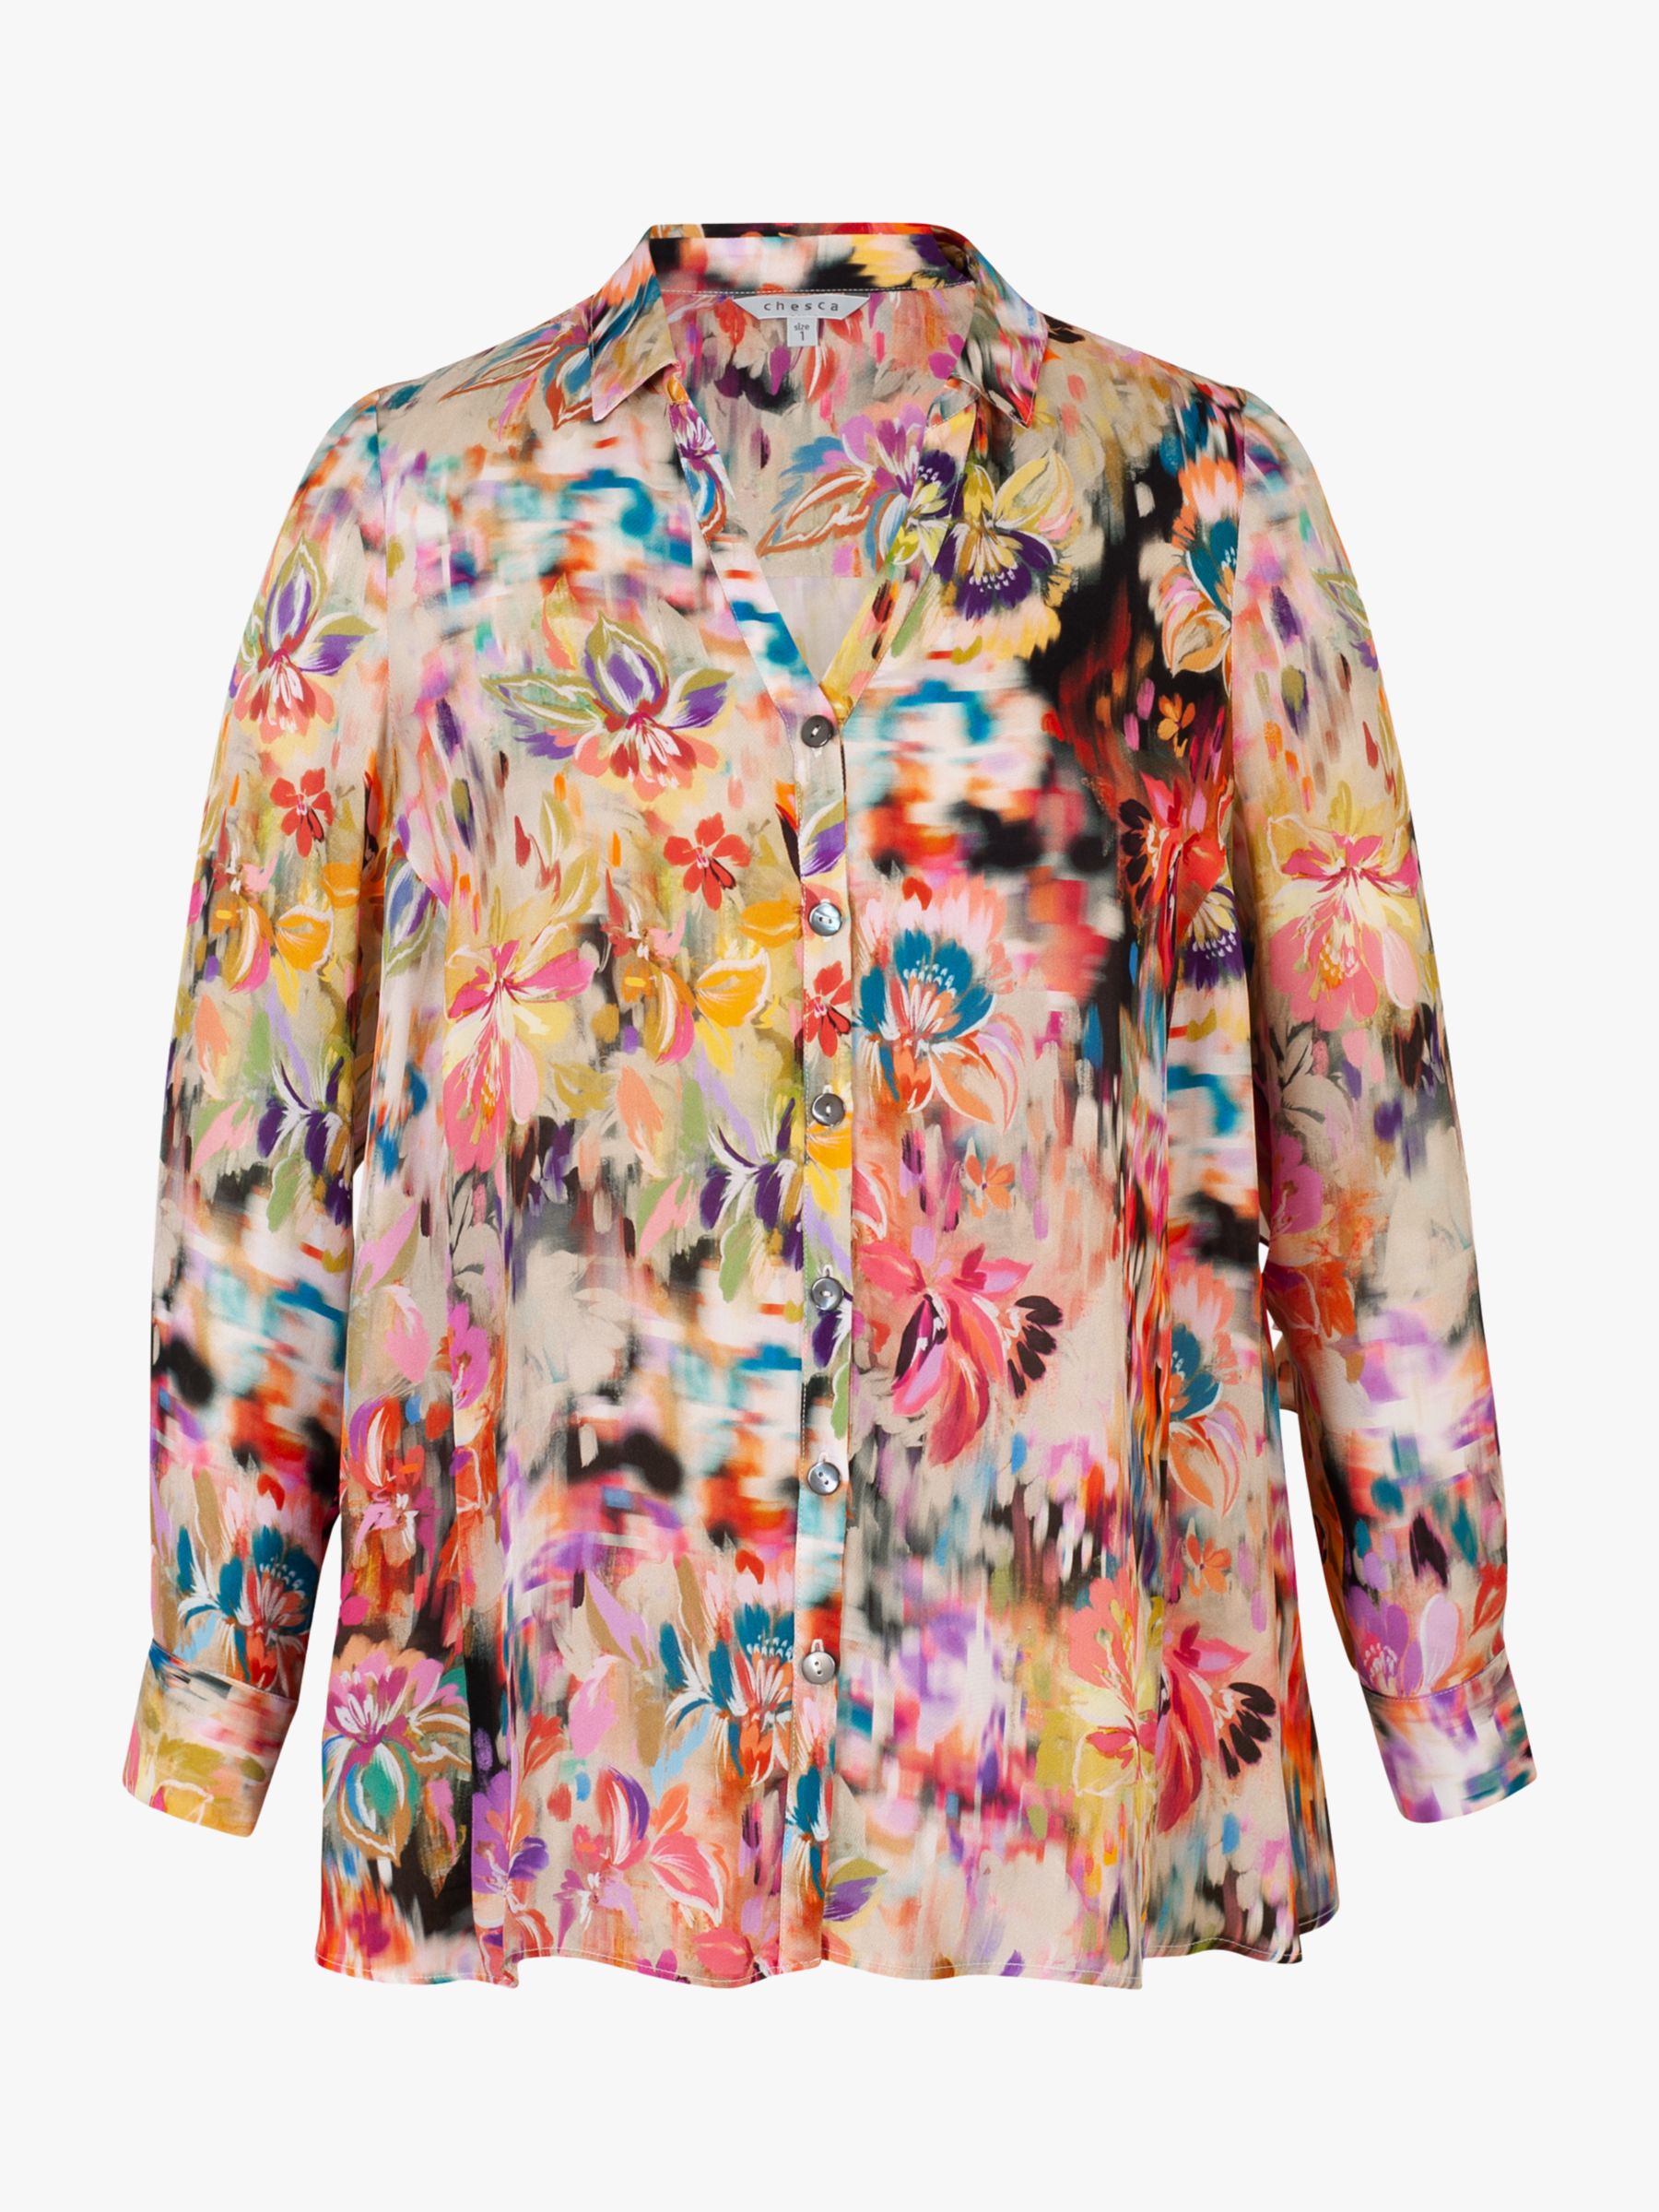 chesca Monaco Floral Chiffon Shirt, Multi at John Lewis & Partners